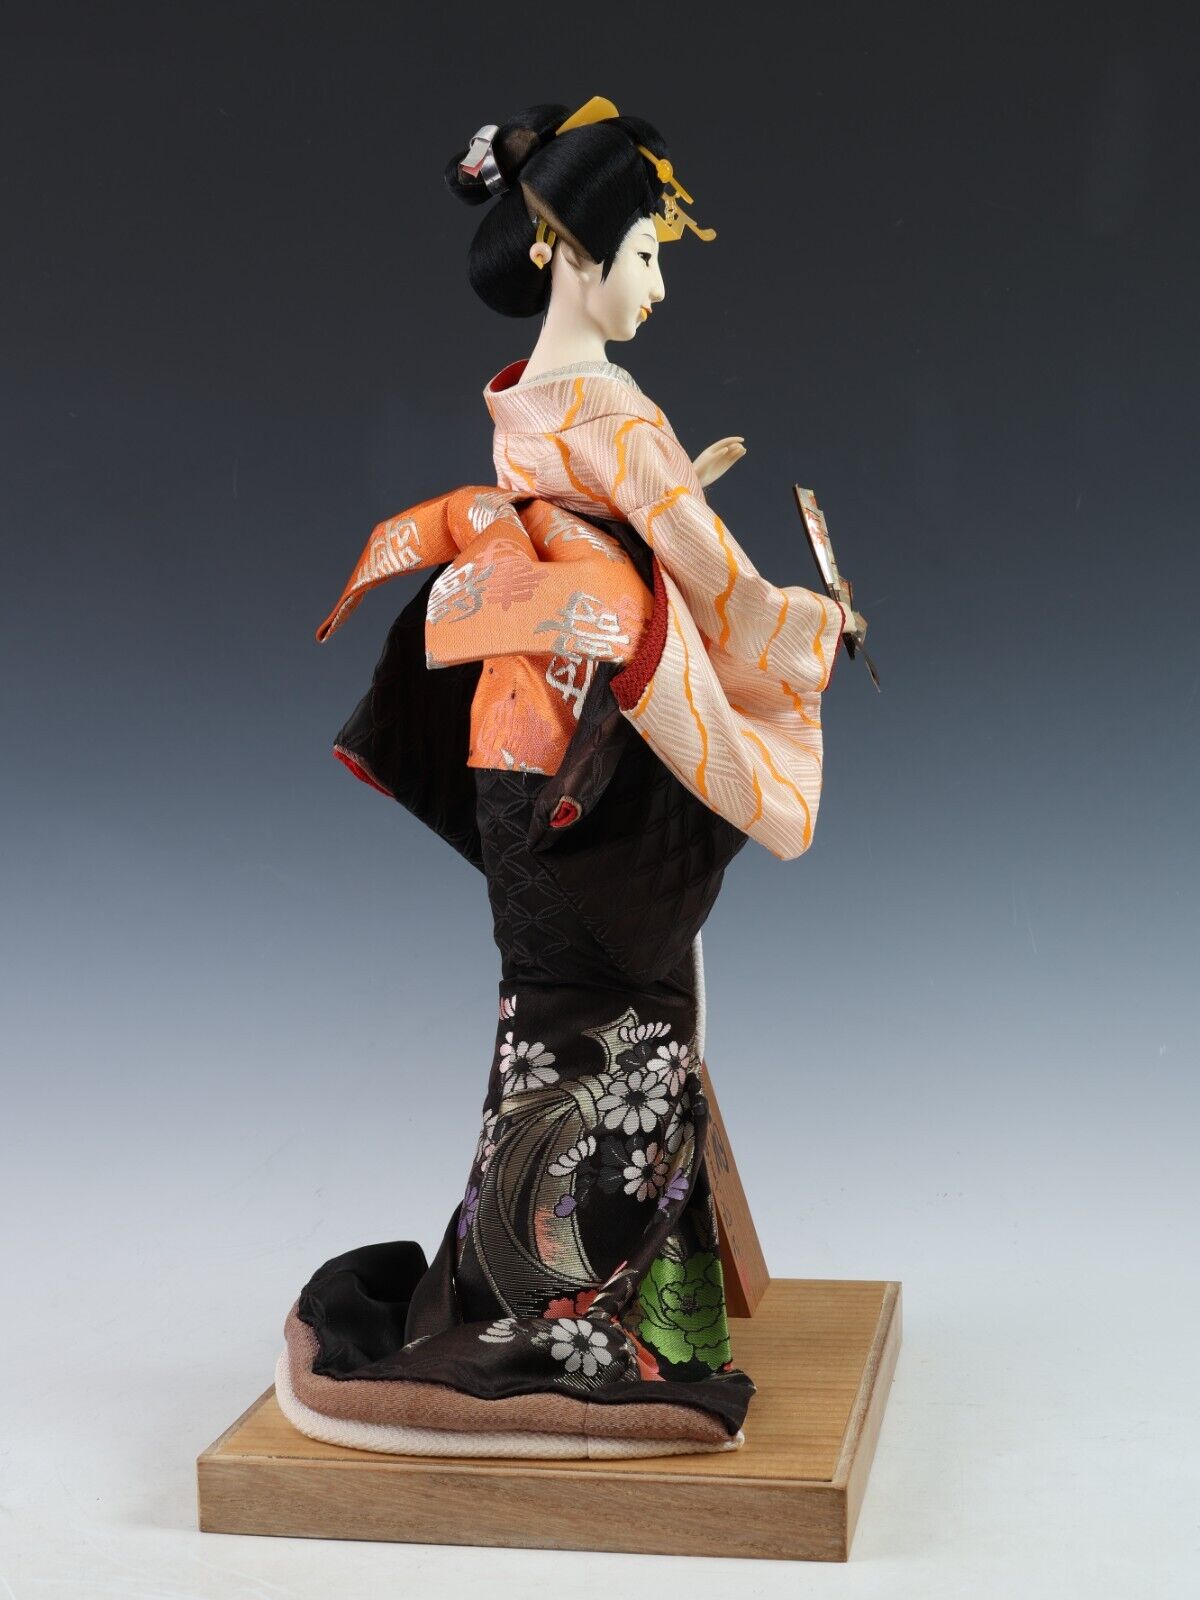 Collectible Japanese Geisha Doll with Traditional Kimono and Accessory Vintage Sukiyo Showa Era.